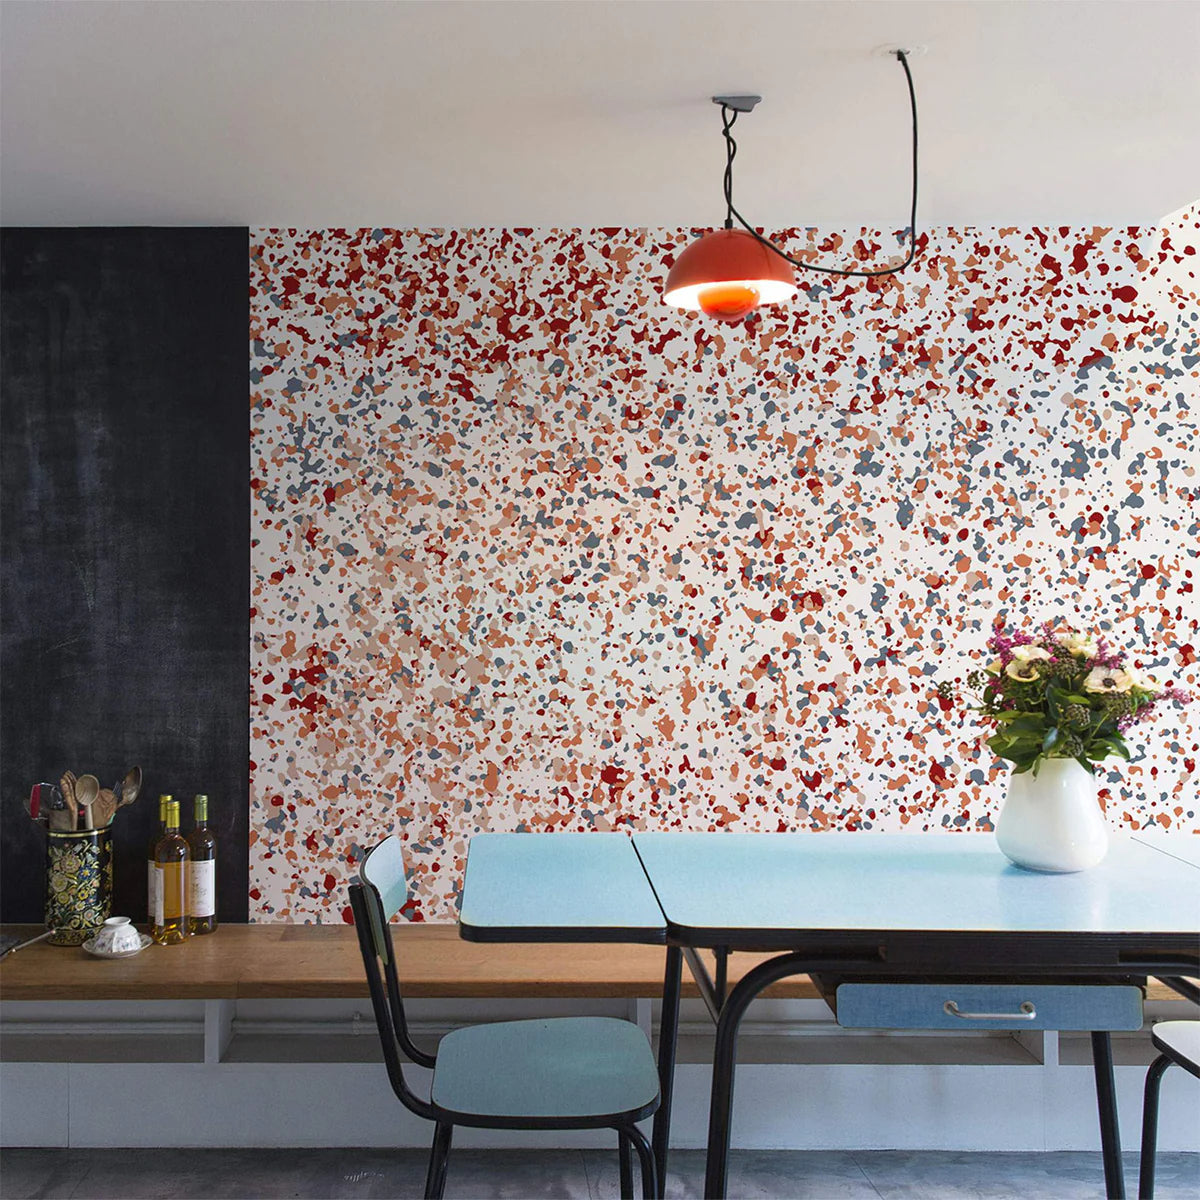 Stardust pattern wallpaper in dining room